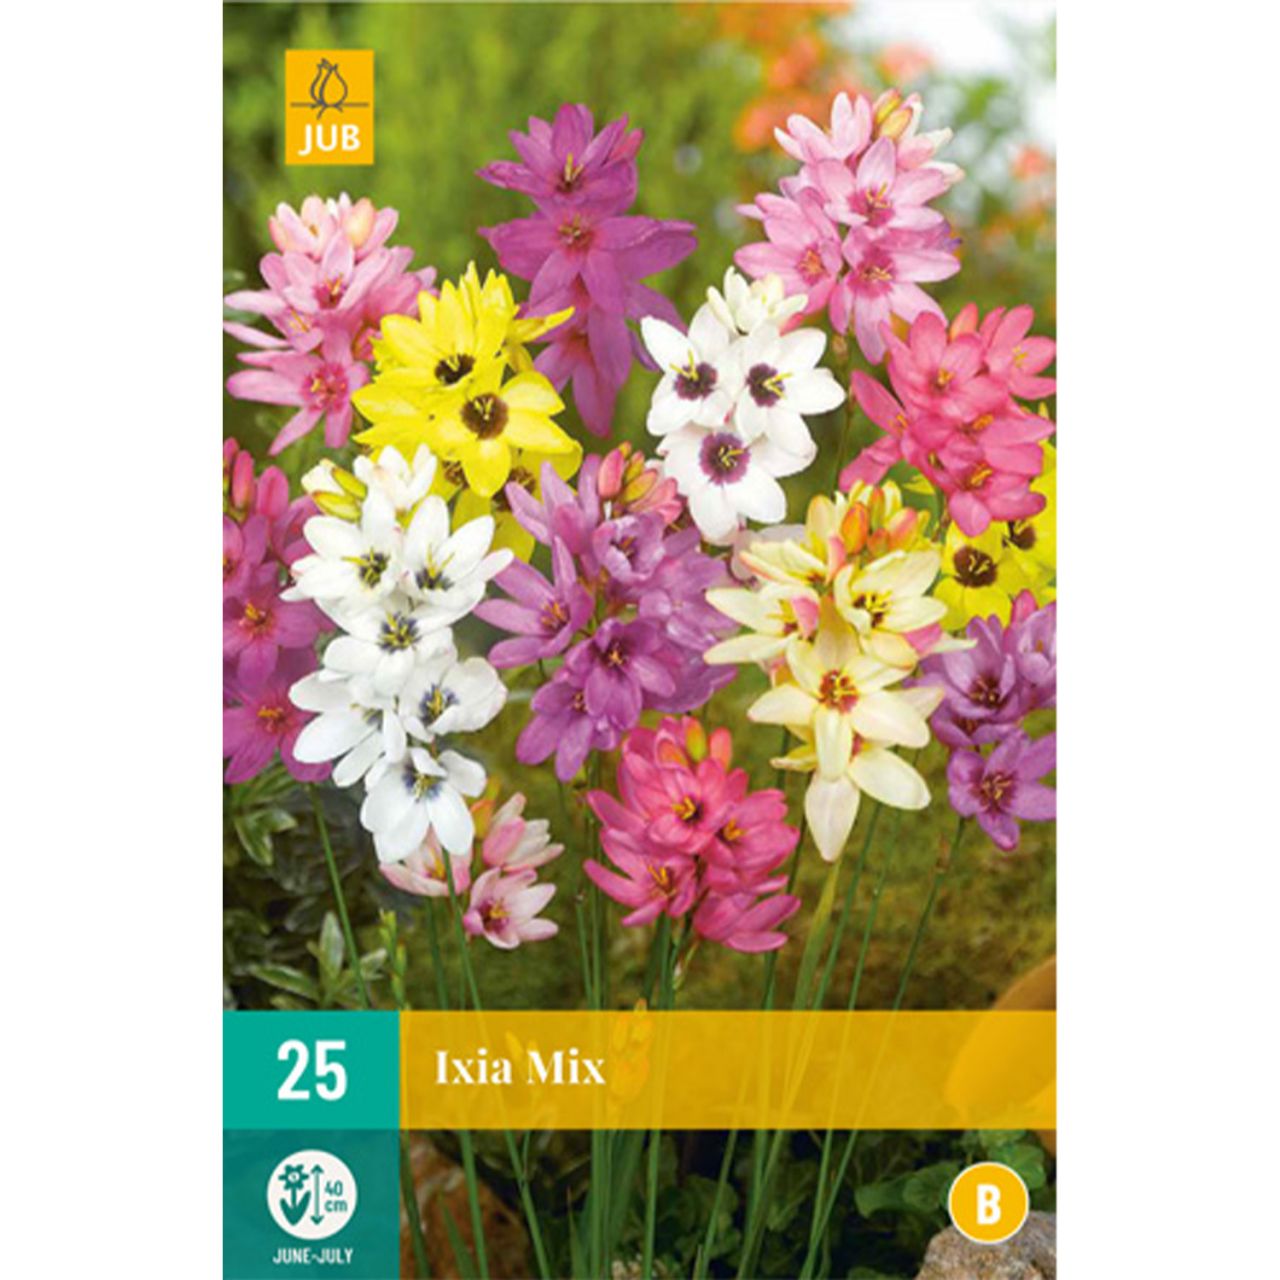 Kategorie <b>Herbst-Blumenzwiebeln </b> - Abendblume (Ixia) 'Mischung' - 25 Stück - Ixia